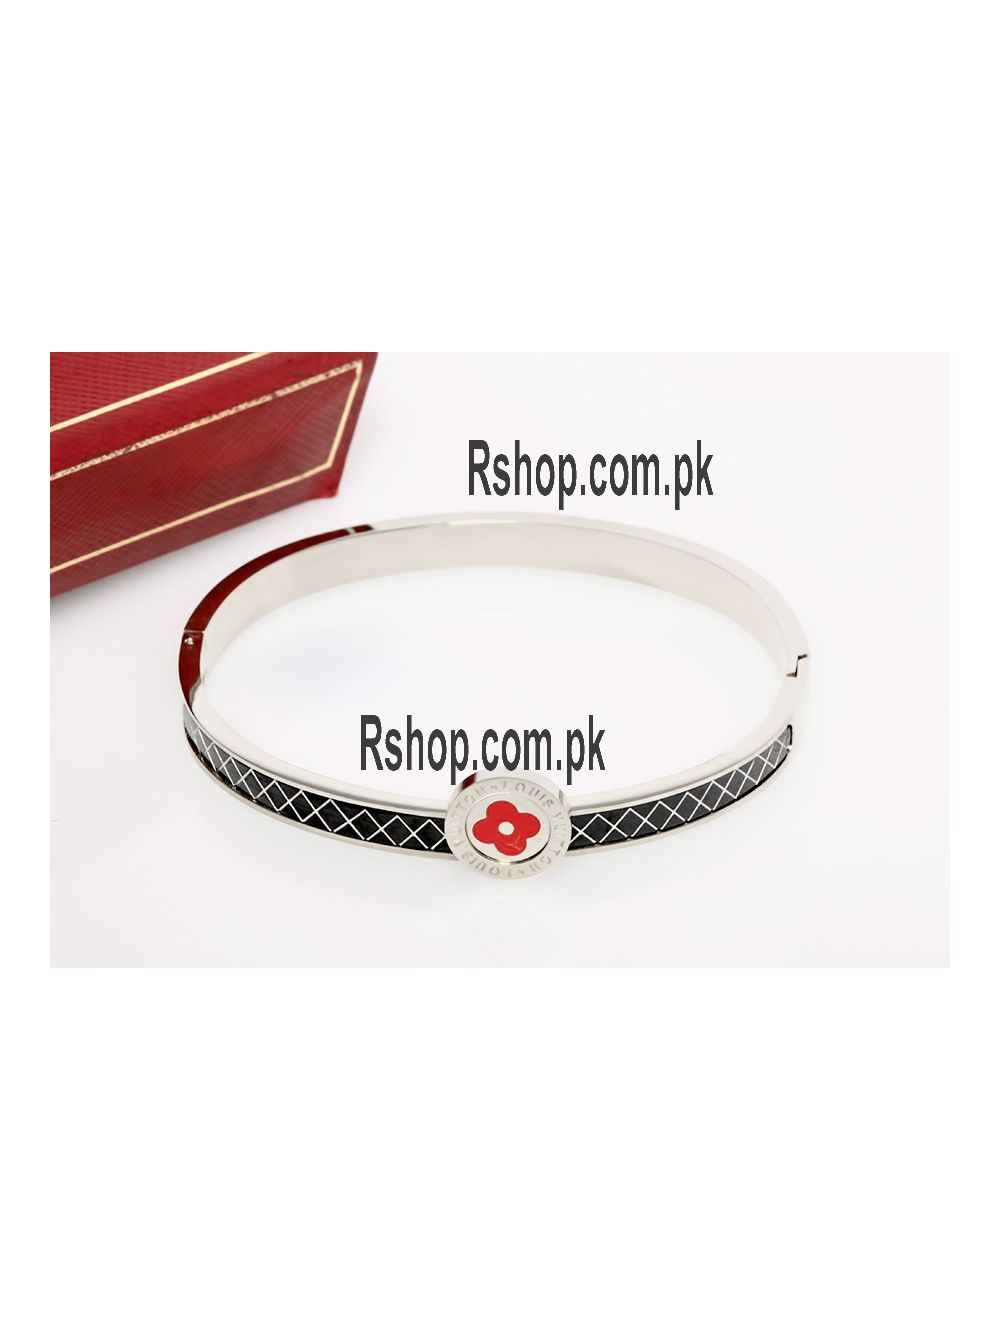 Buy online Lv Lock And Key Bracelet In Pakistan, Rs 1700